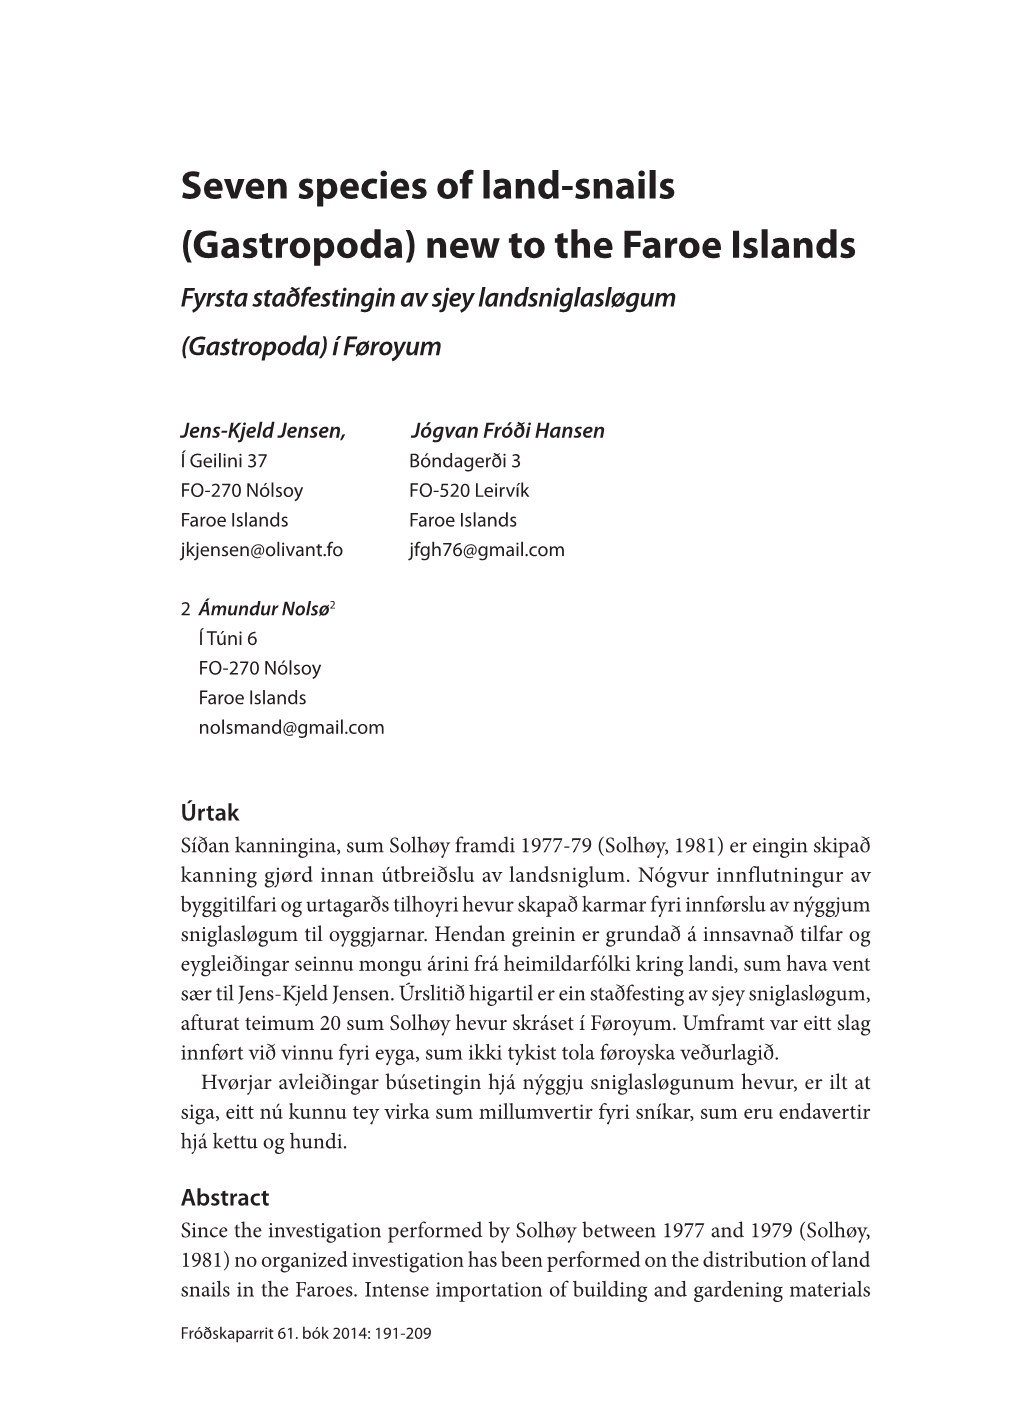 Seven Species of Landsnails (Gastropoda) New to the Faroe Islands